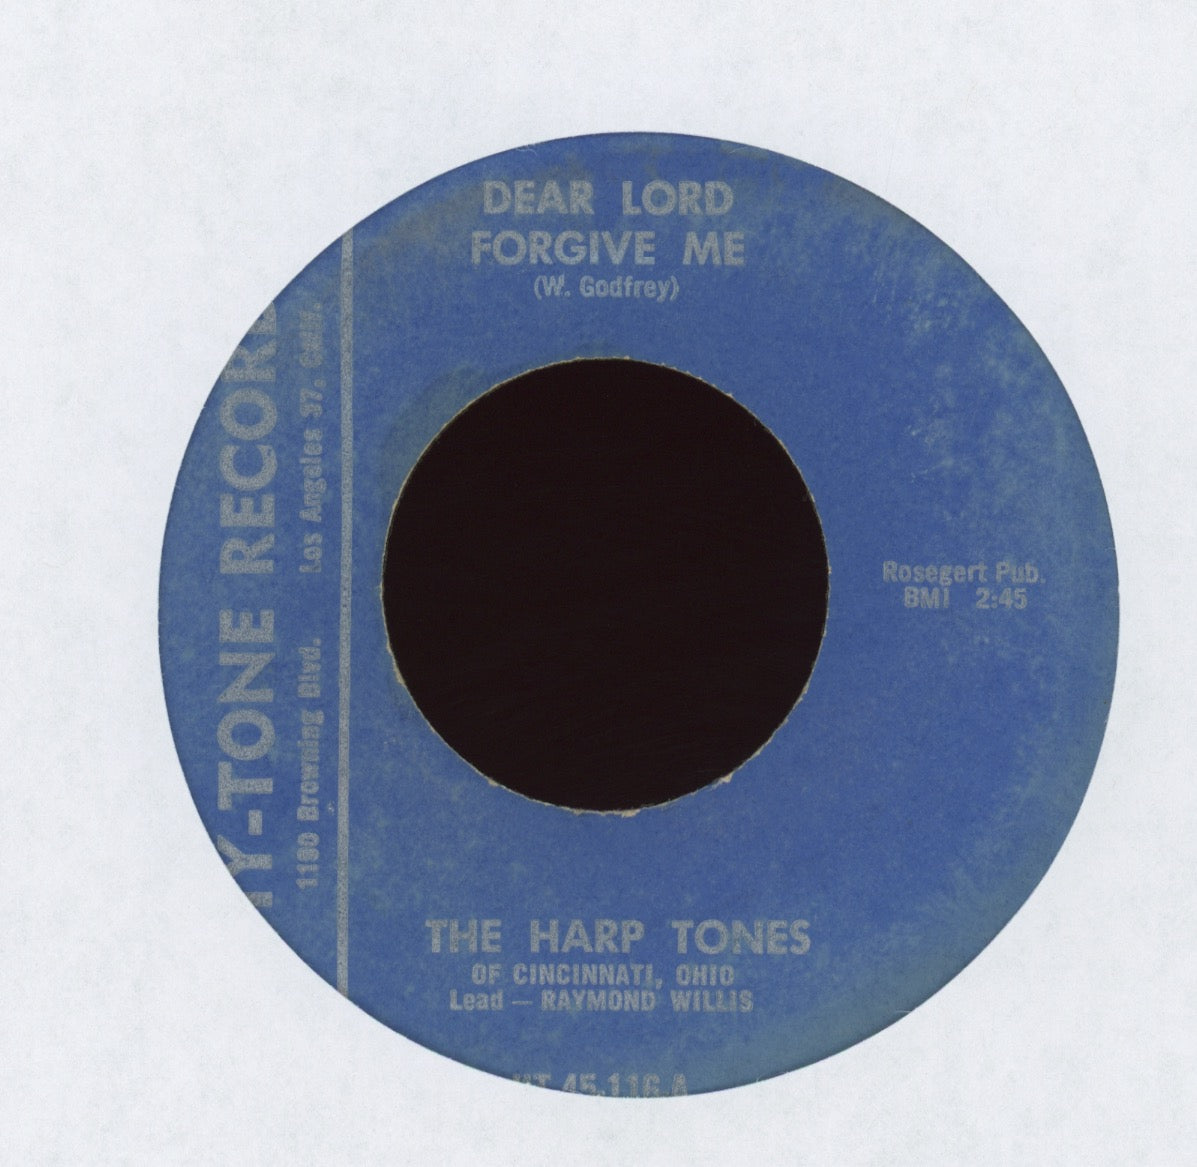 The Harp Tones Of Cincinnati, Ohio - I Made It on Hy-Tone Gospel 45